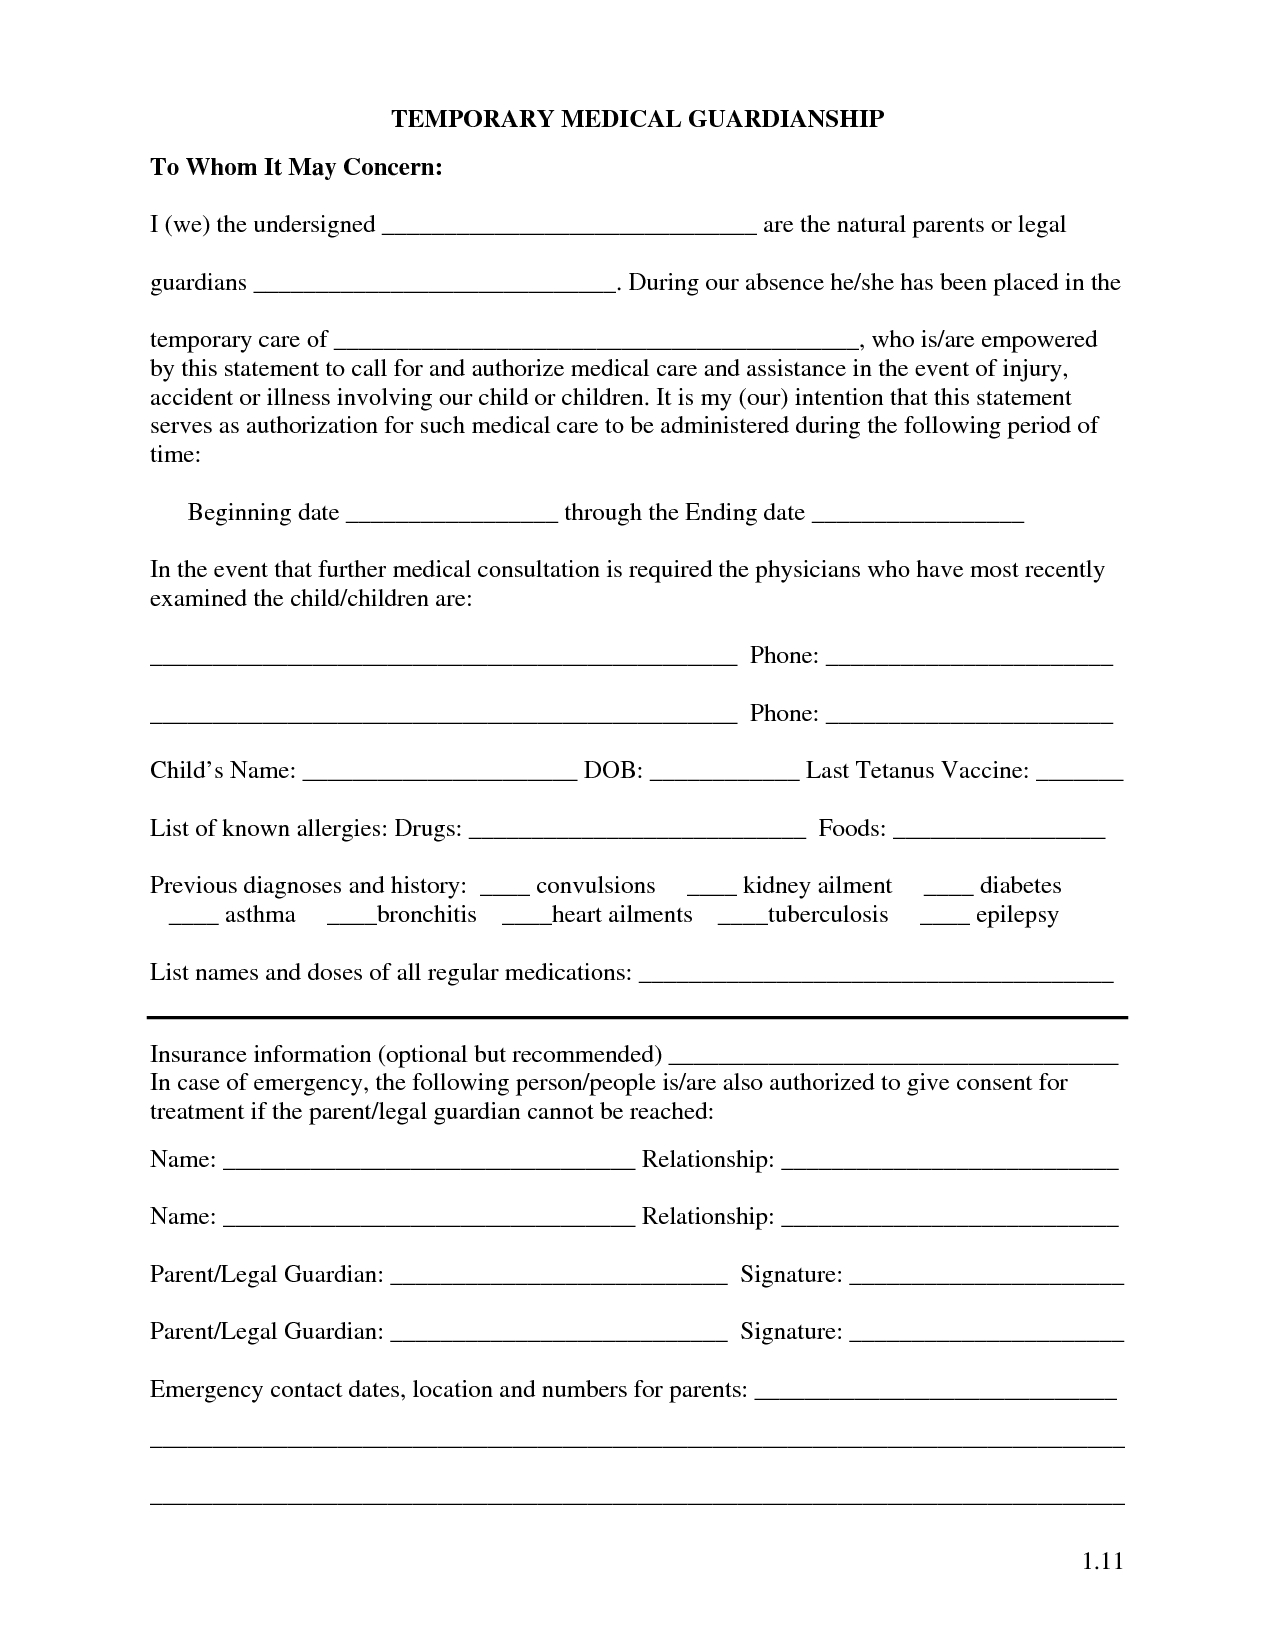 Free Printable Temporary Guardianship Forms | Forms - Free Printable Child Custody Forms